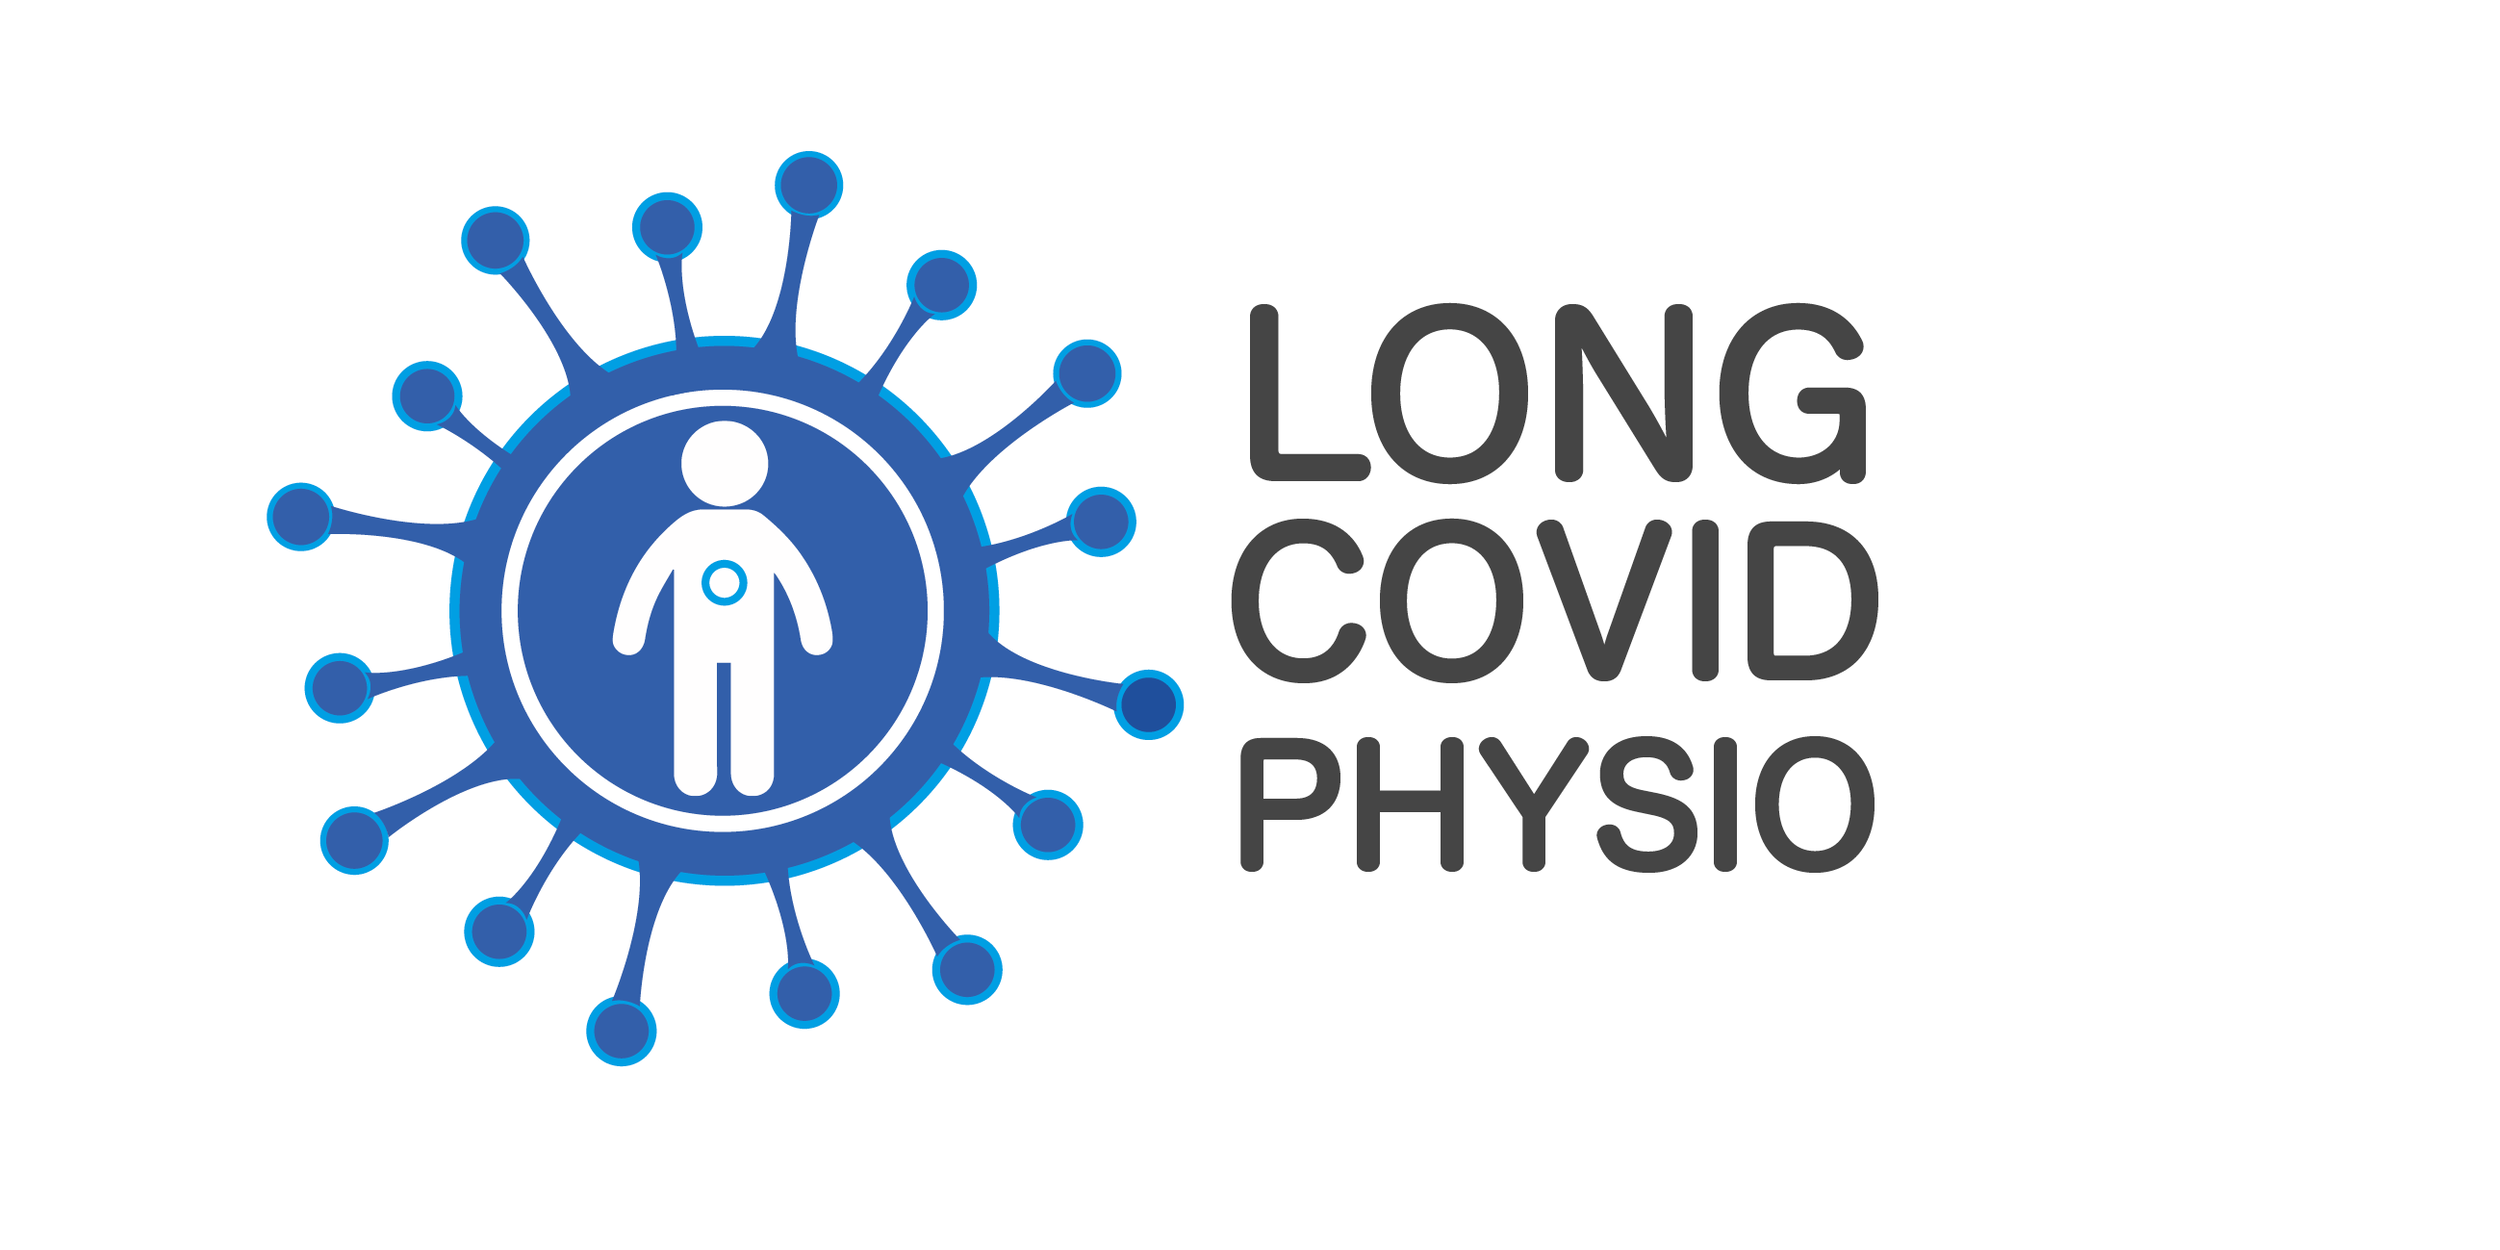 COVID Long Logo Physio .png